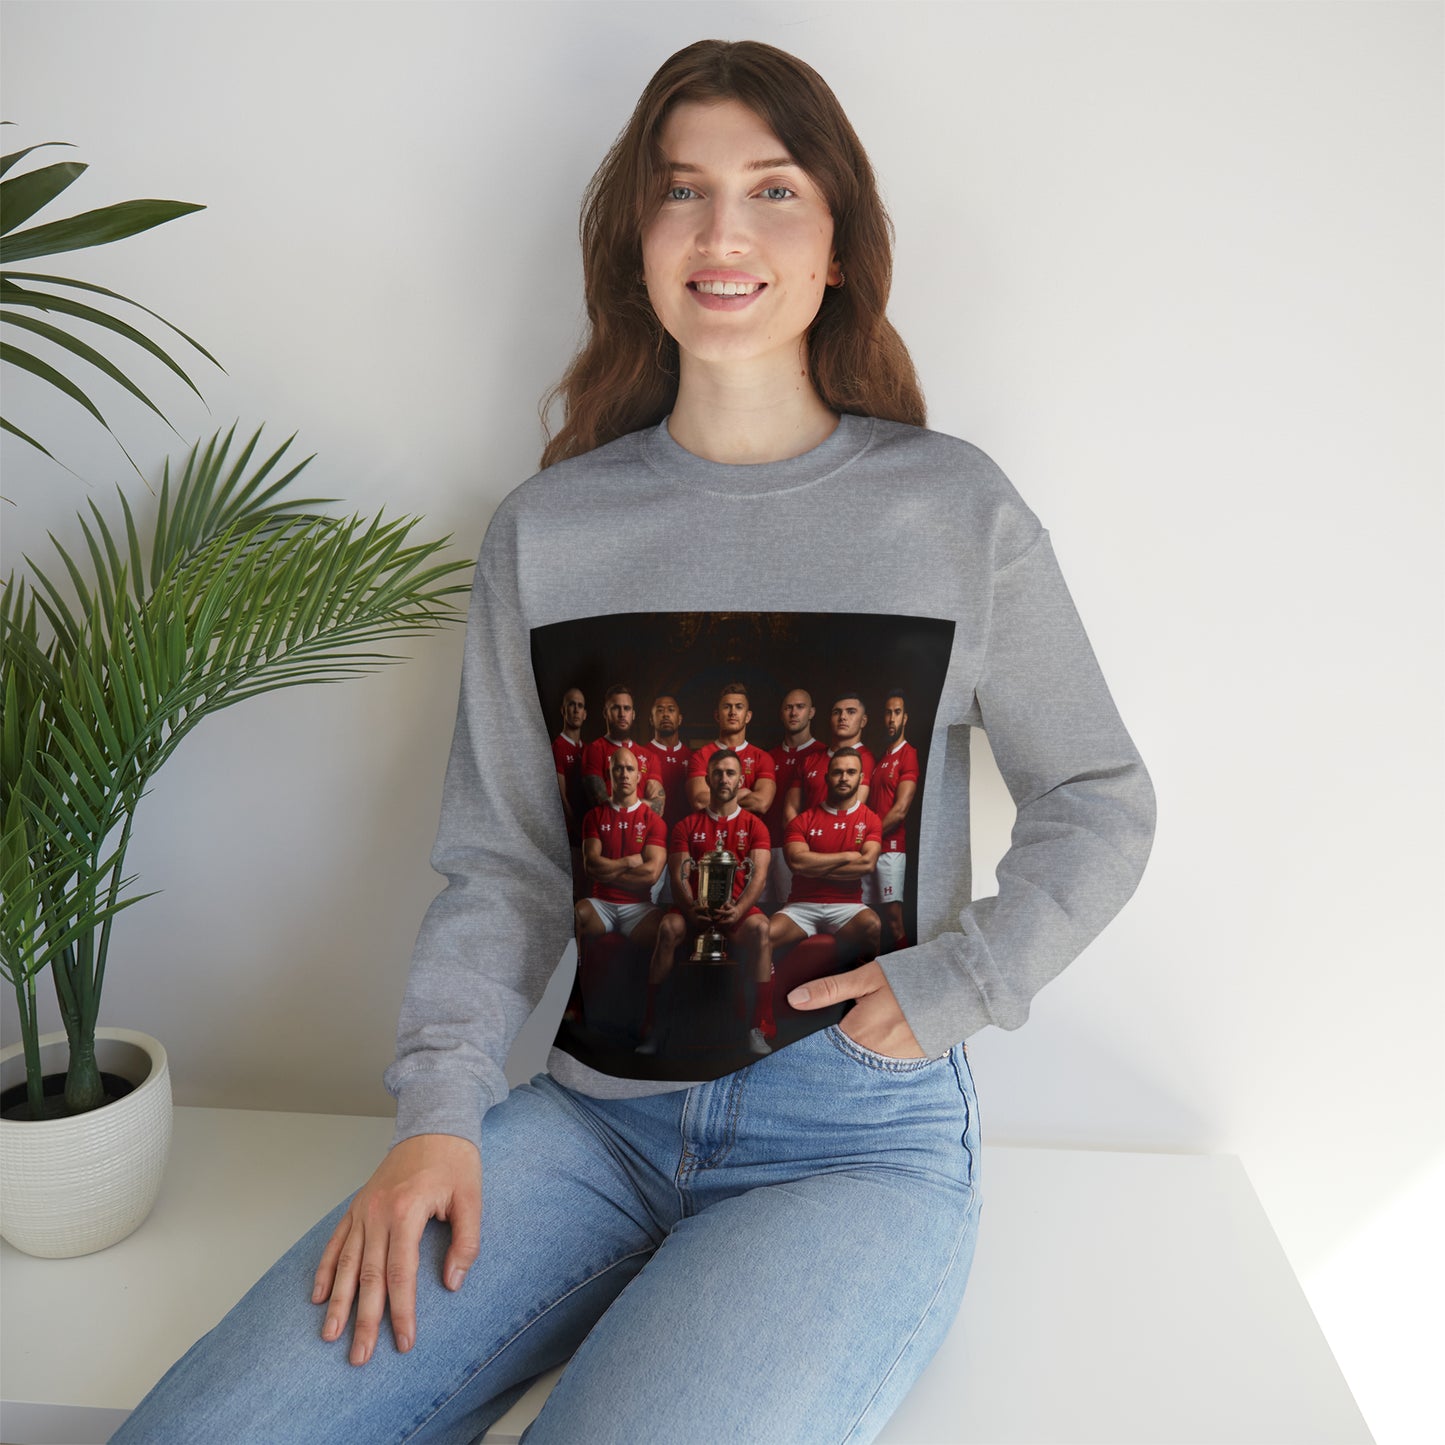 Wales RWC Photoshoot - light sweatshirts